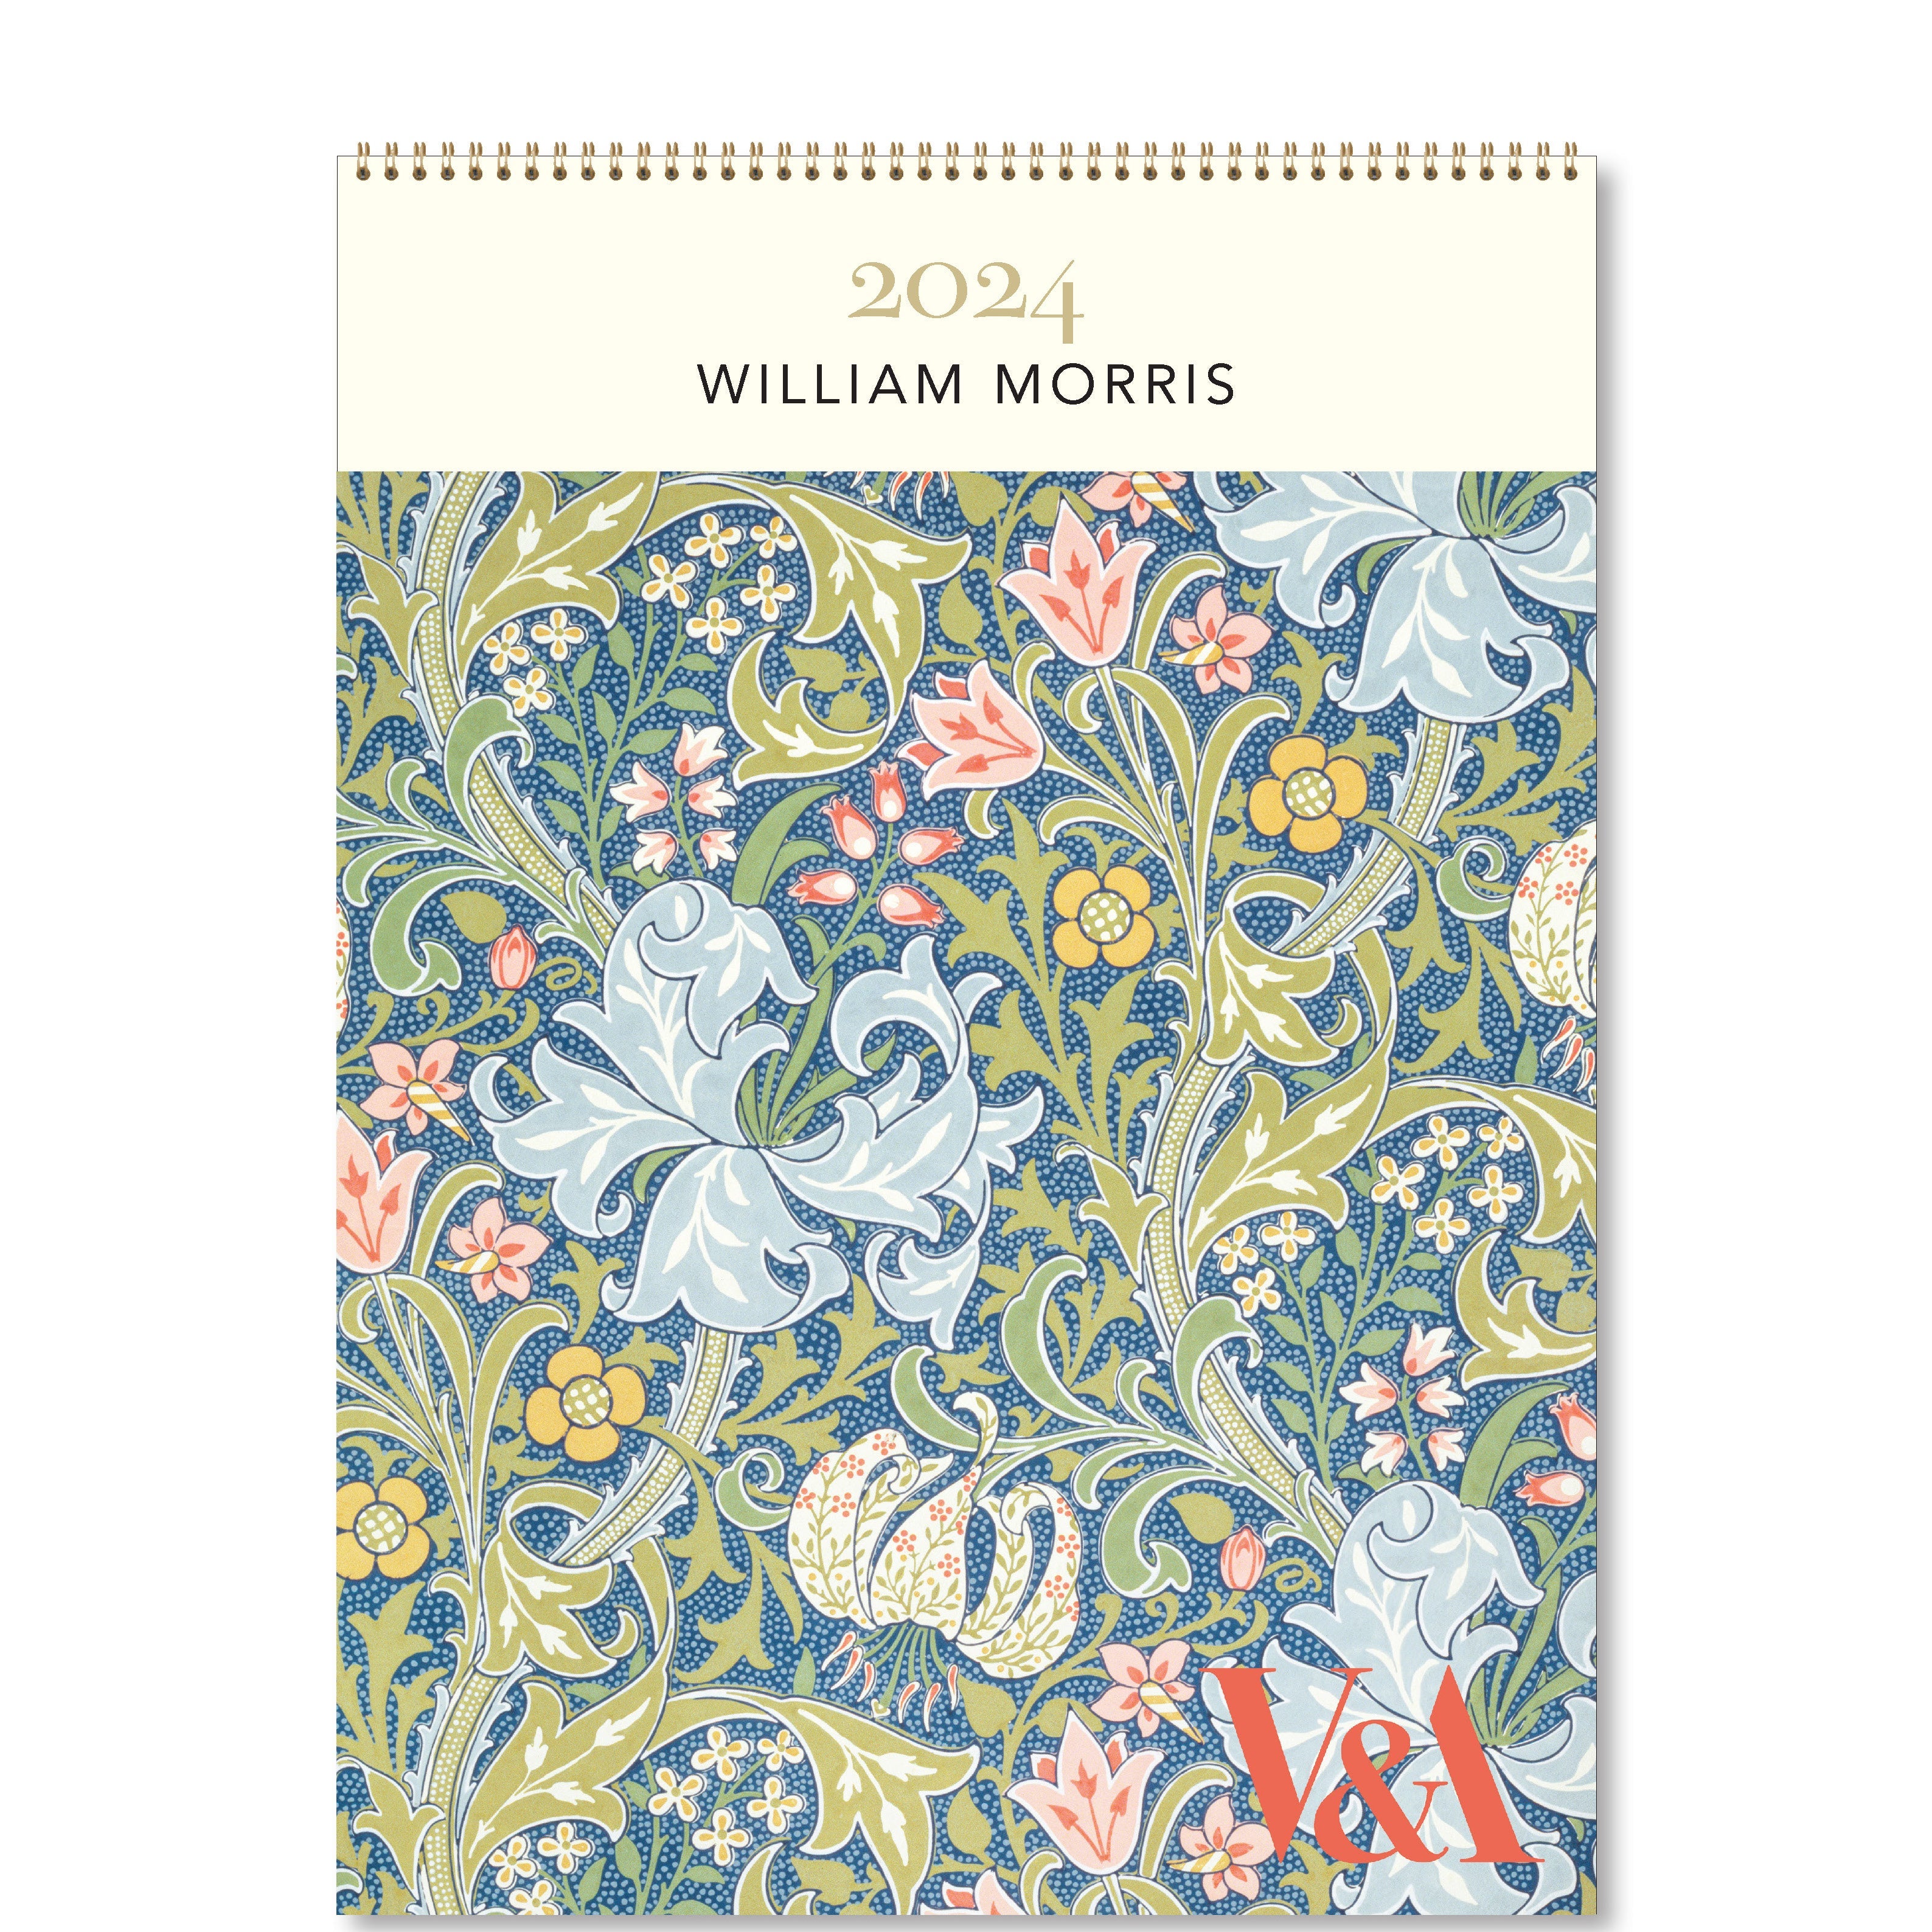 2024 William Morris Deluxe Wall Calendar Art Calendars